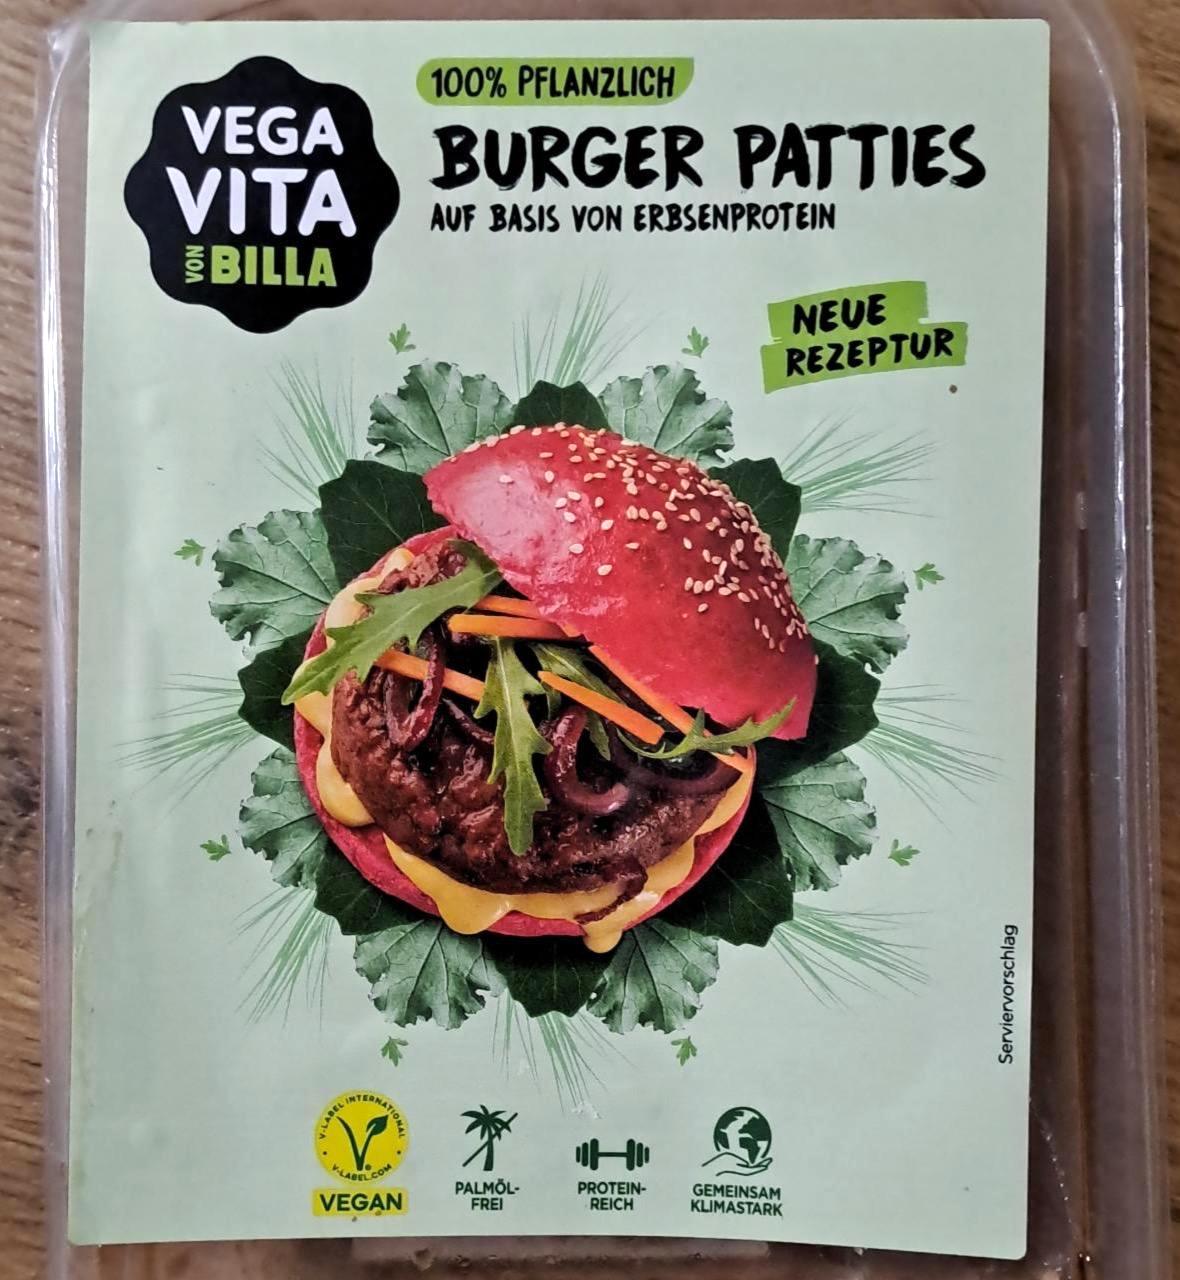 Képek - Burger patties Vega Vita von Billa